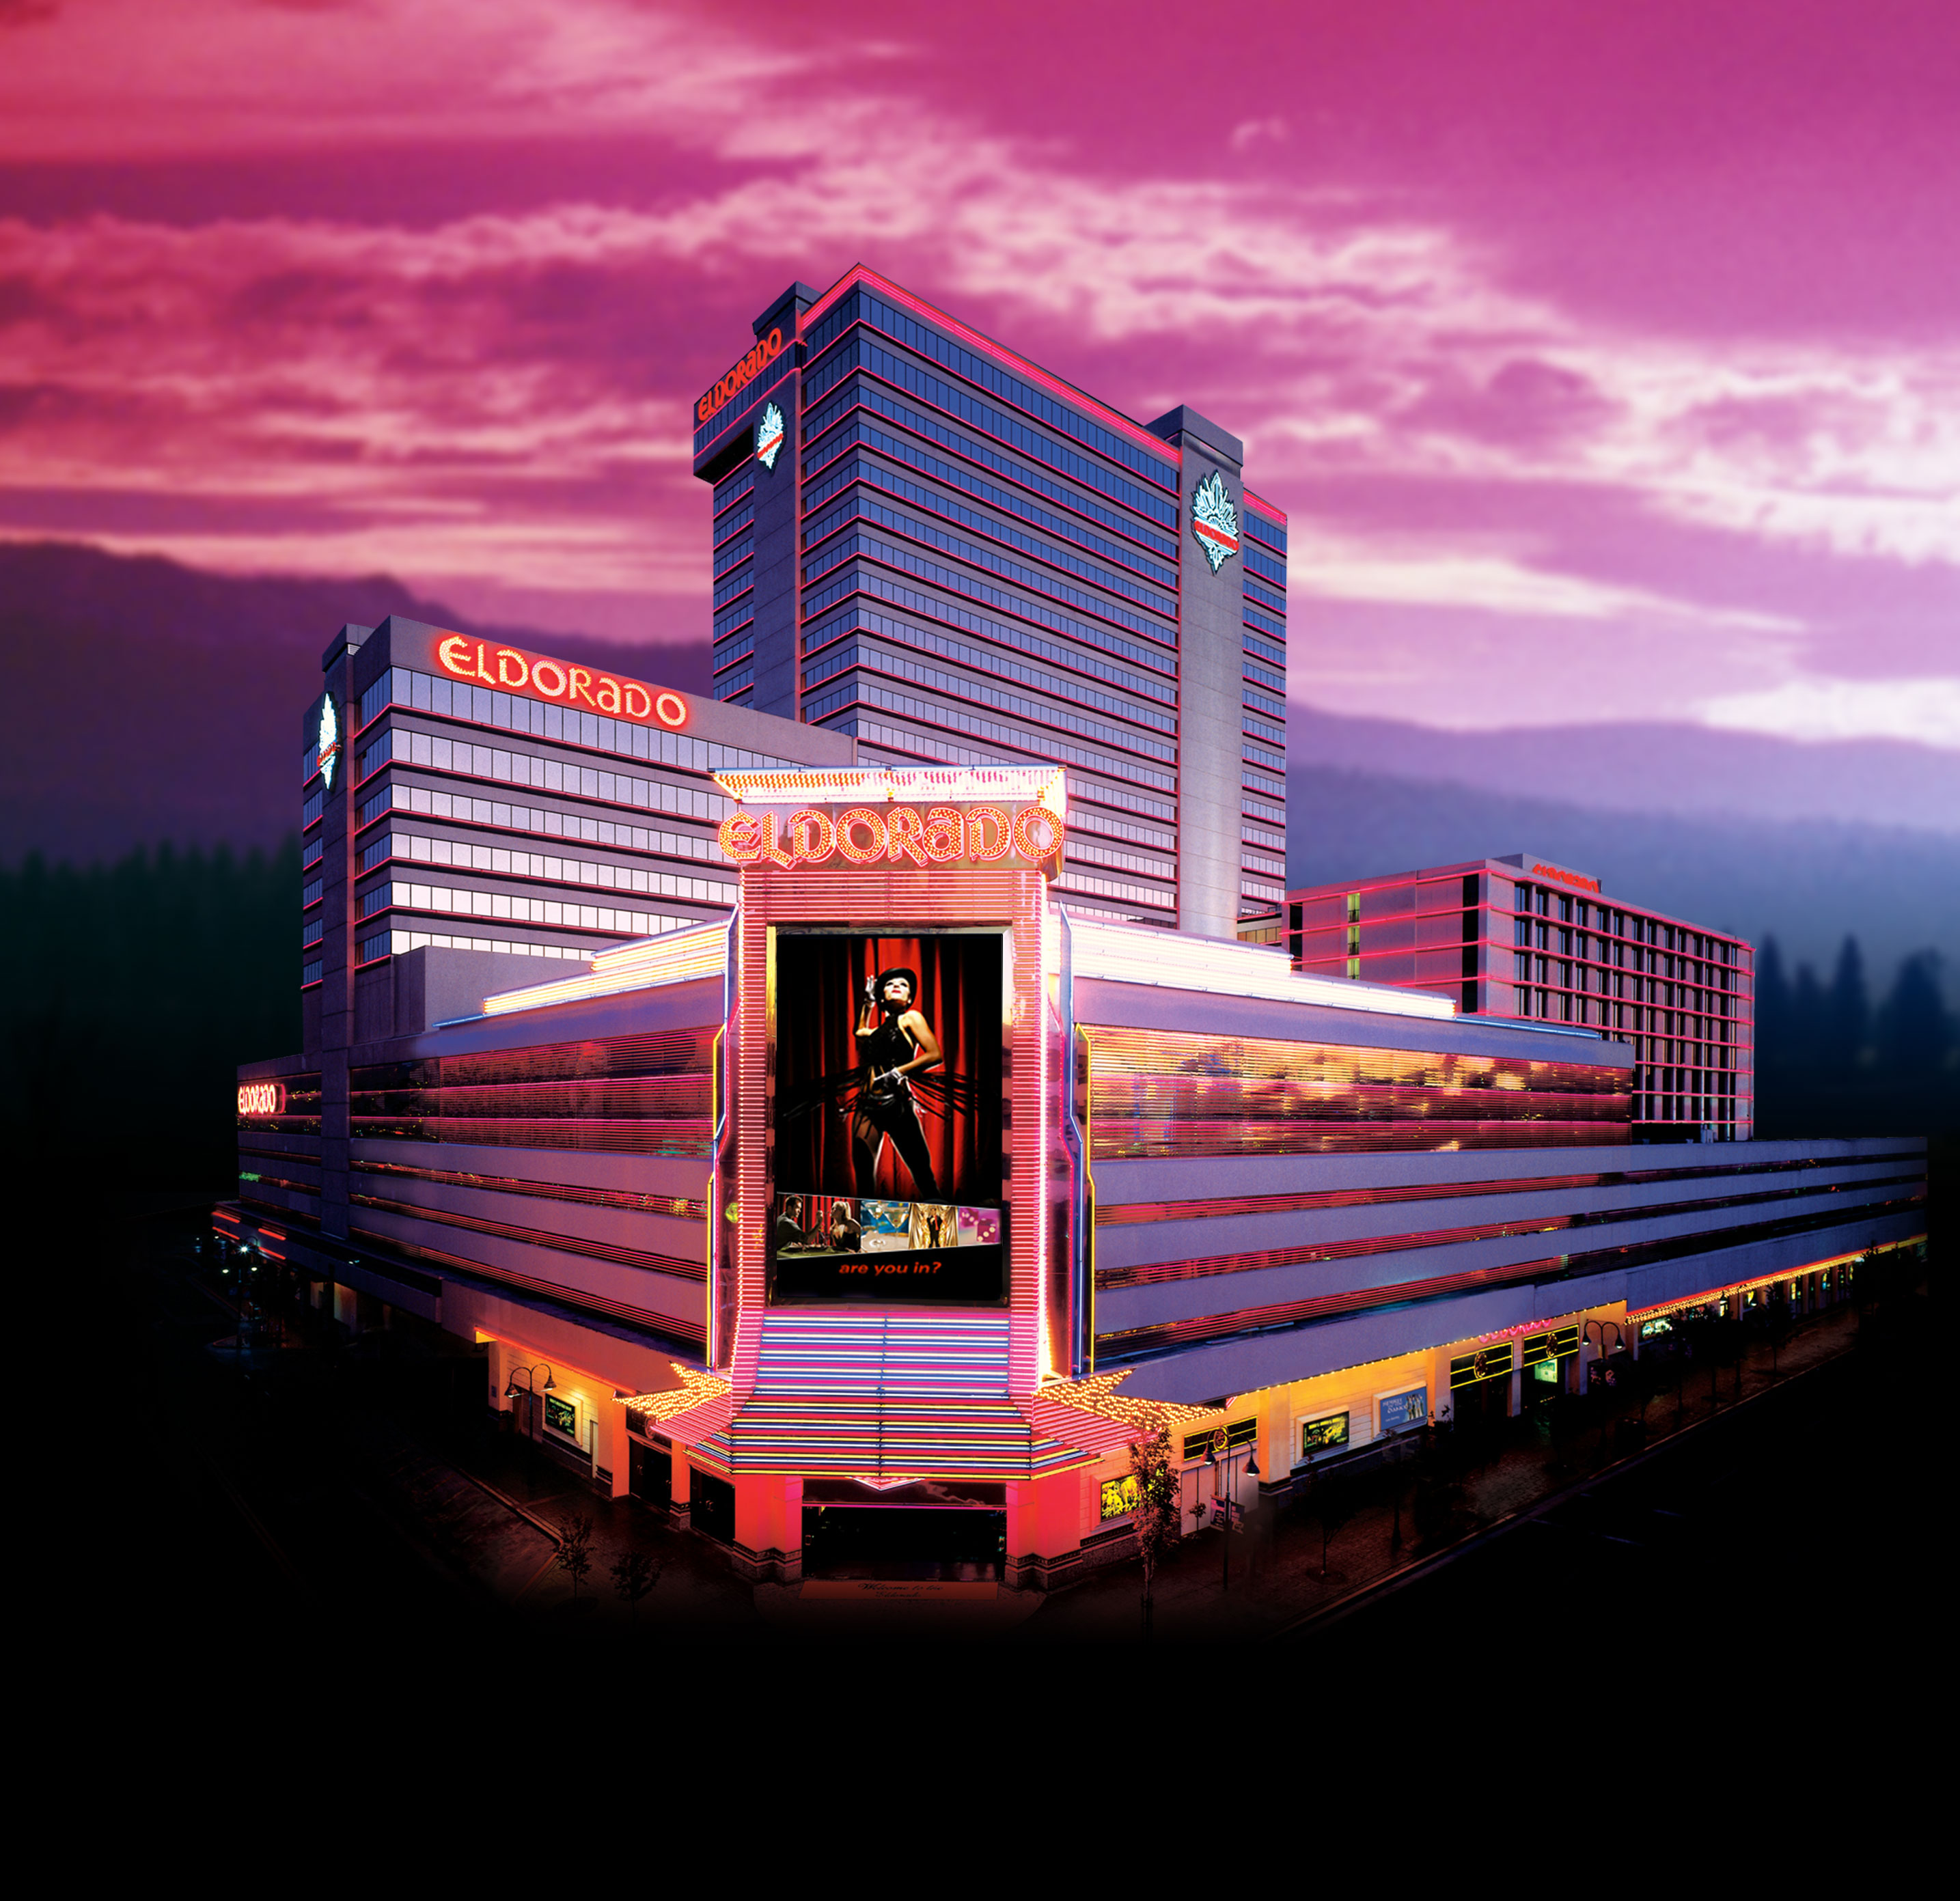 Eldorado and Silver Legacy Hotel Casinos Use NEC’s Hospitality